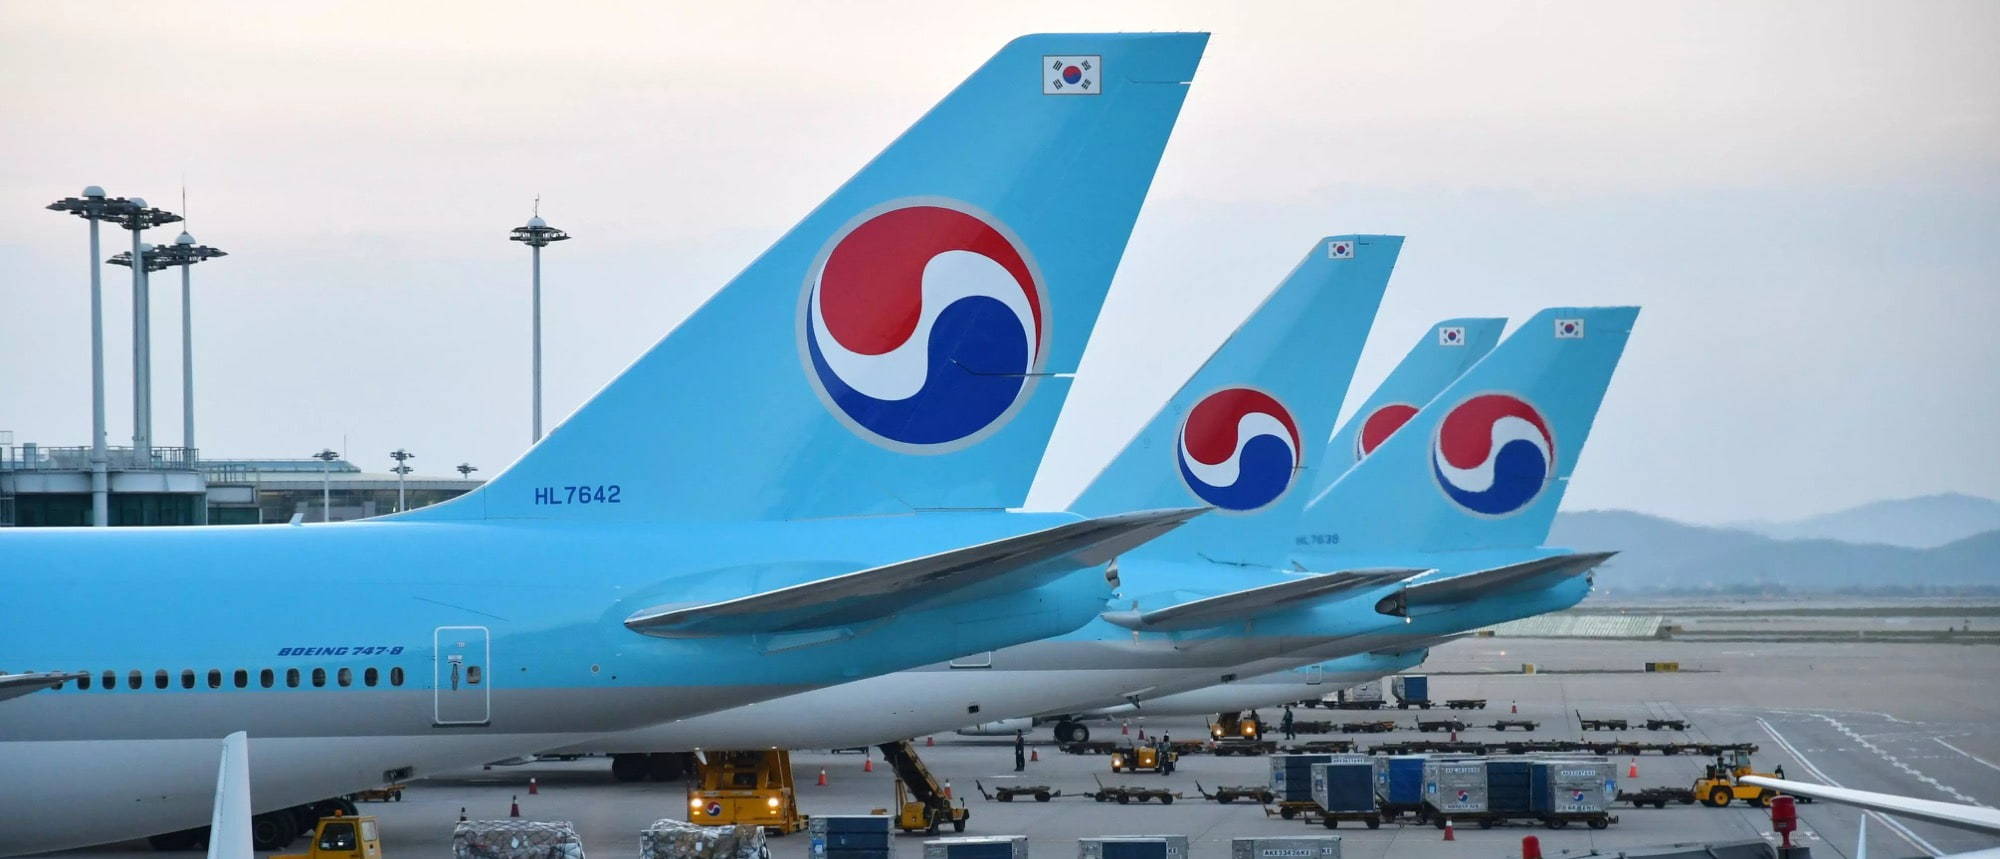 Korean Air Jobs | Rishworth Aviation | Planes parked at airport